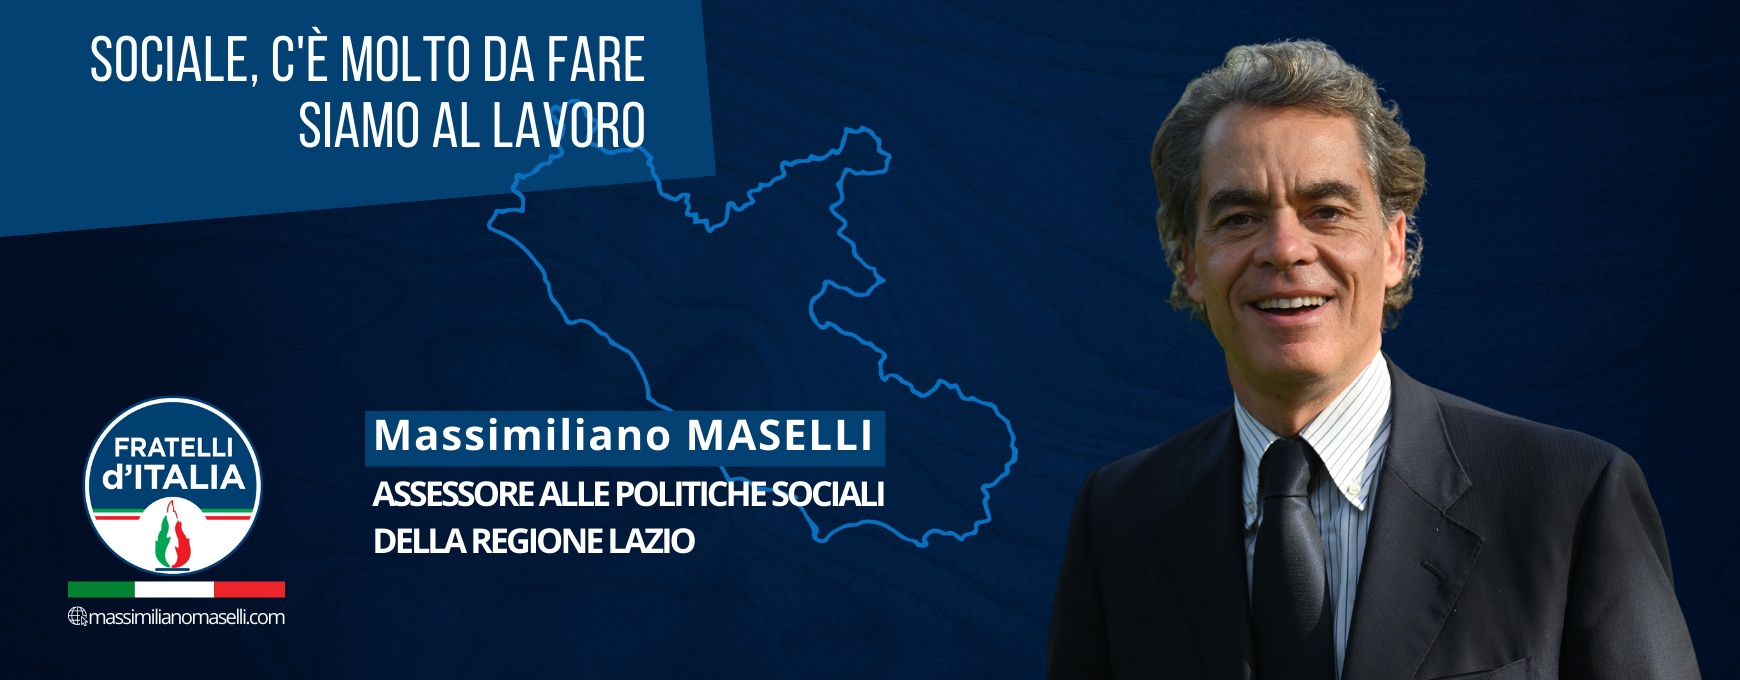 Massimiliano Maselli